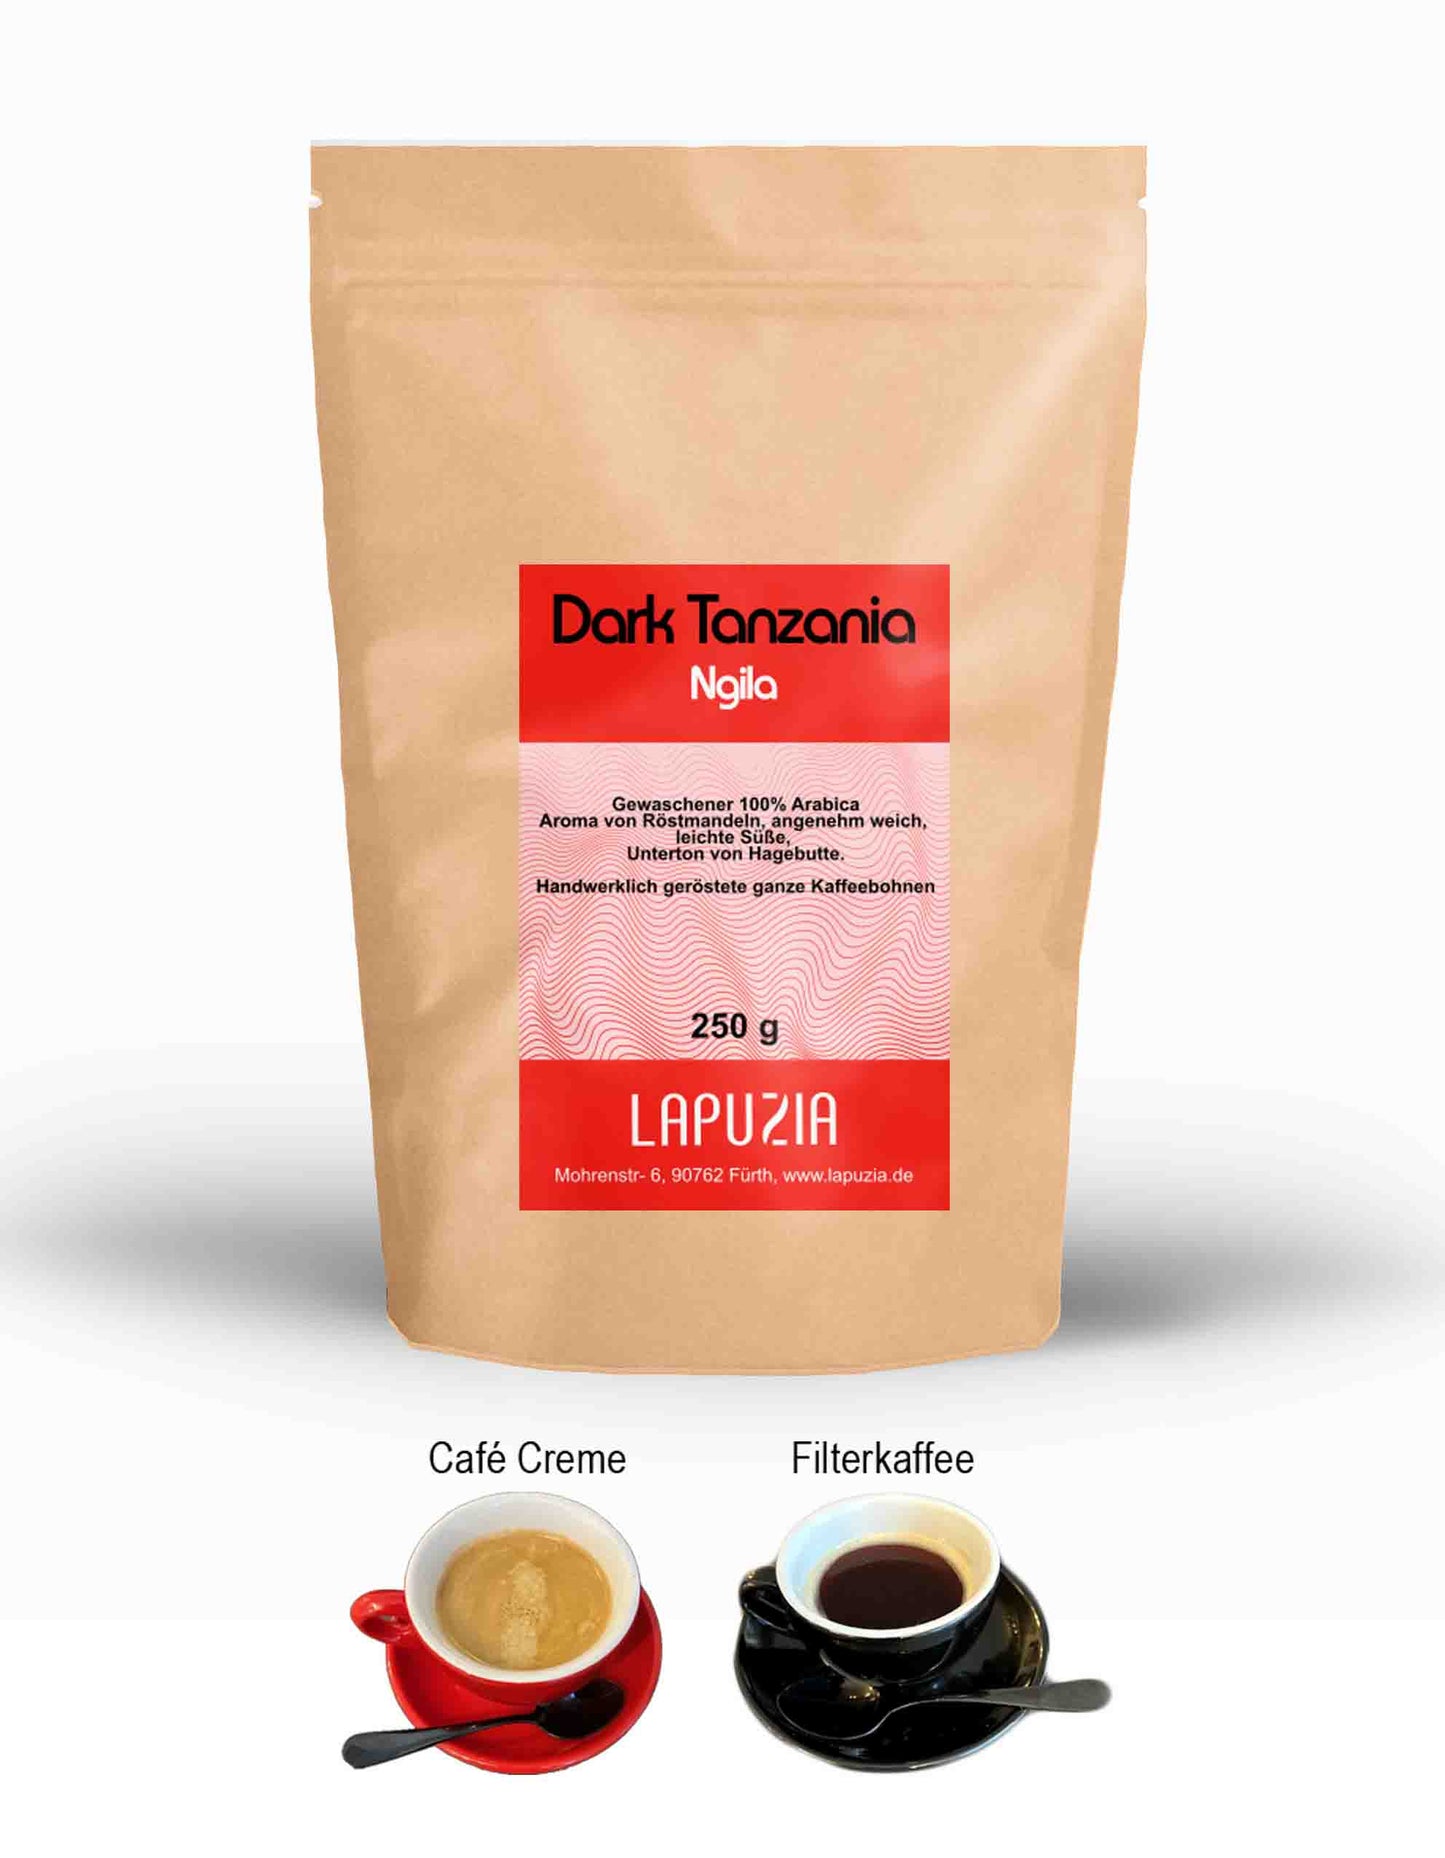 Kaffee Dark Tanzania